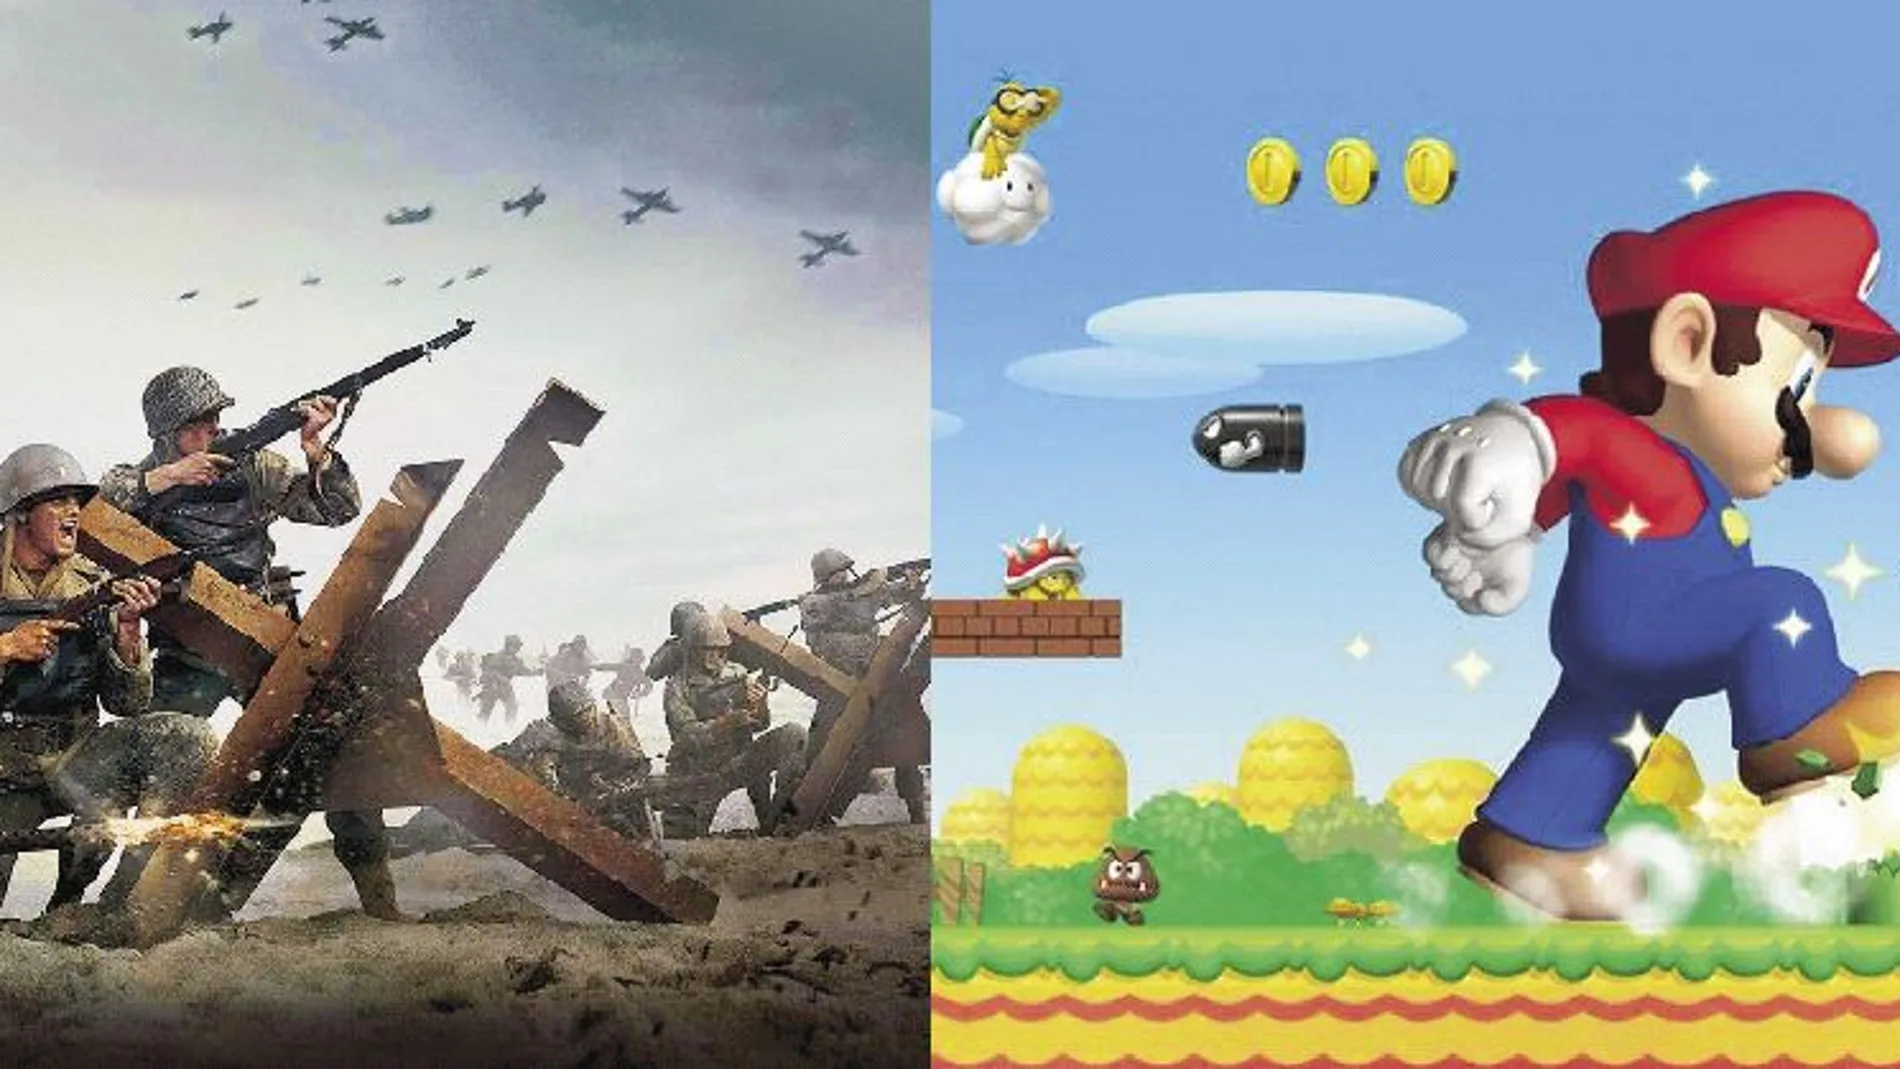 Call of Duty vs. Super Mario